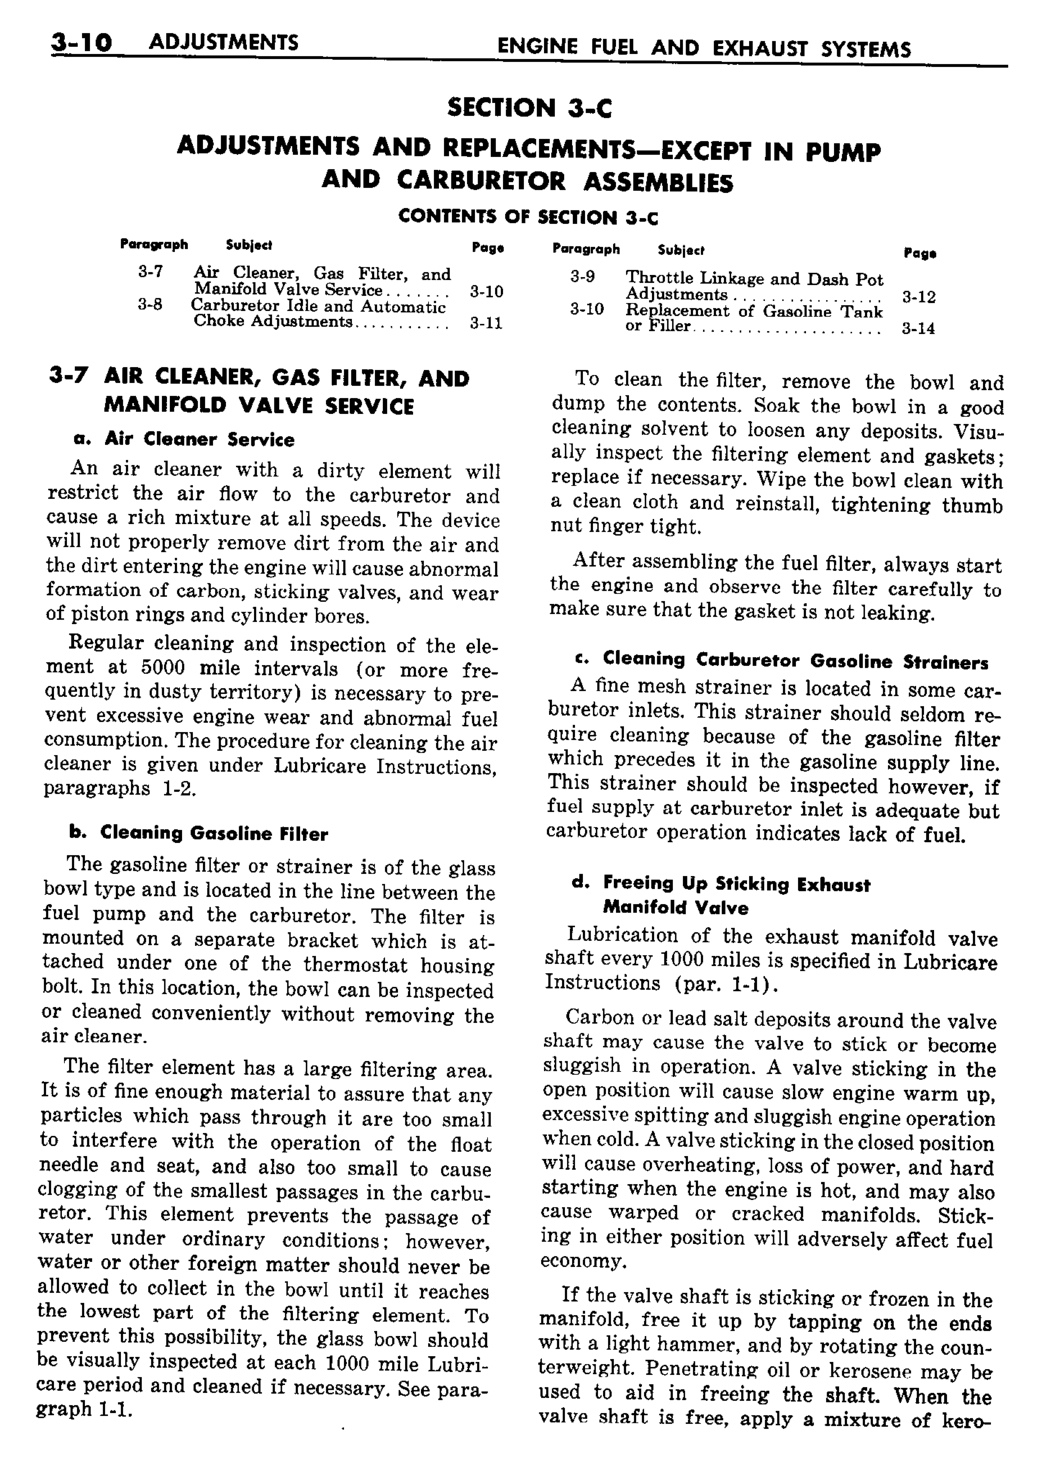 n_04 1959 Buick Shop Manual - Engine Fuel & Exhaust-010-010.jpg